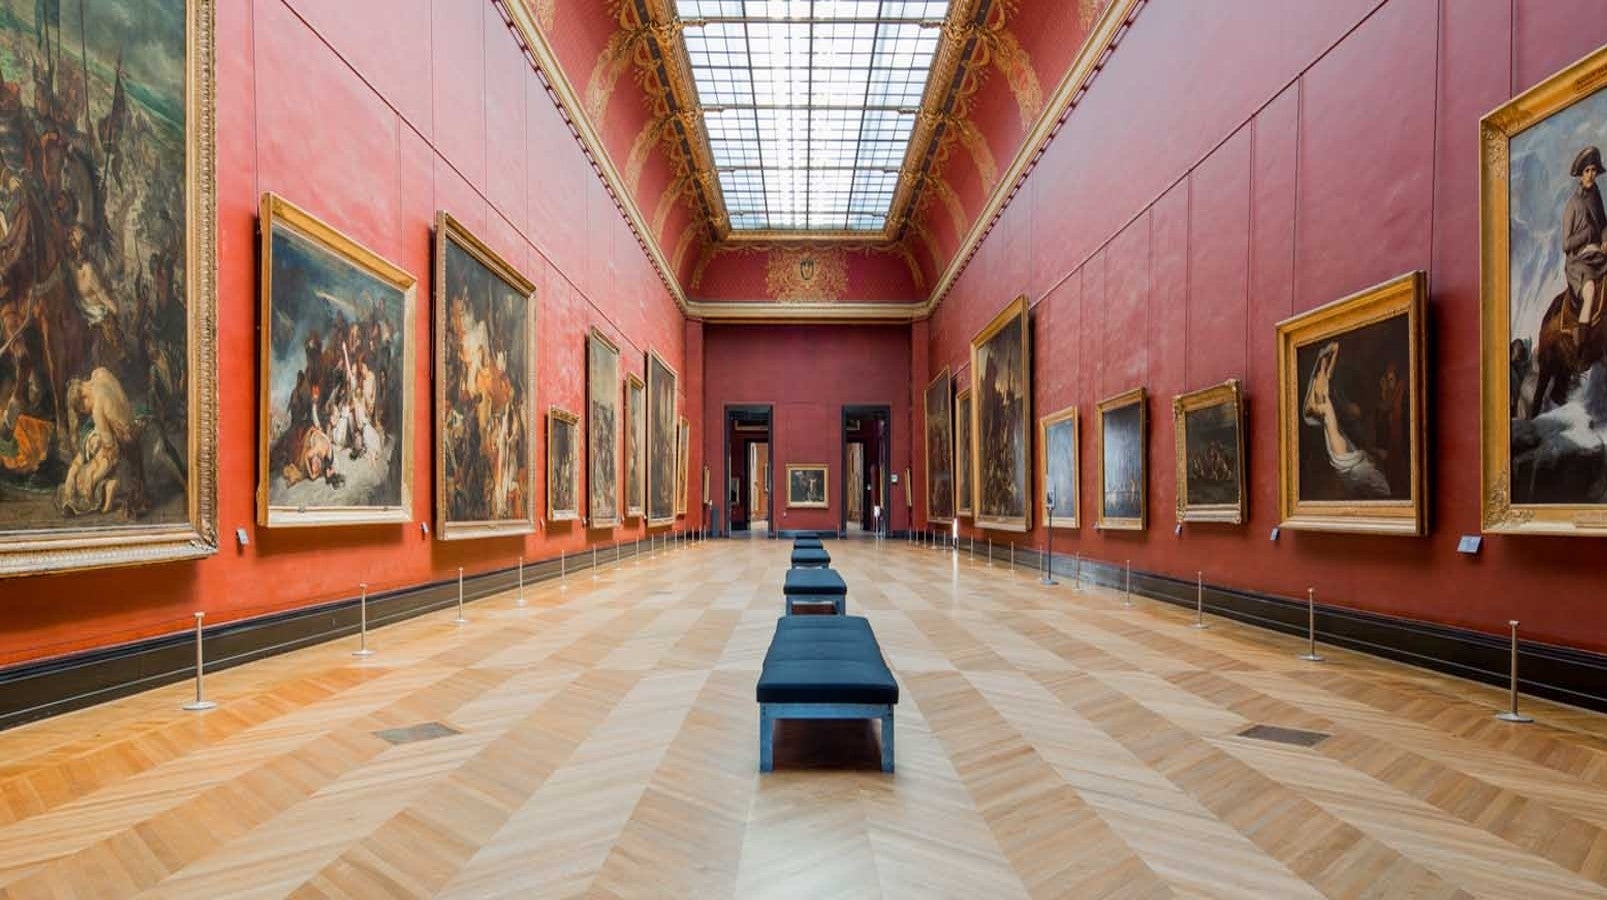 Nos Bastidores do Museu do Louvre